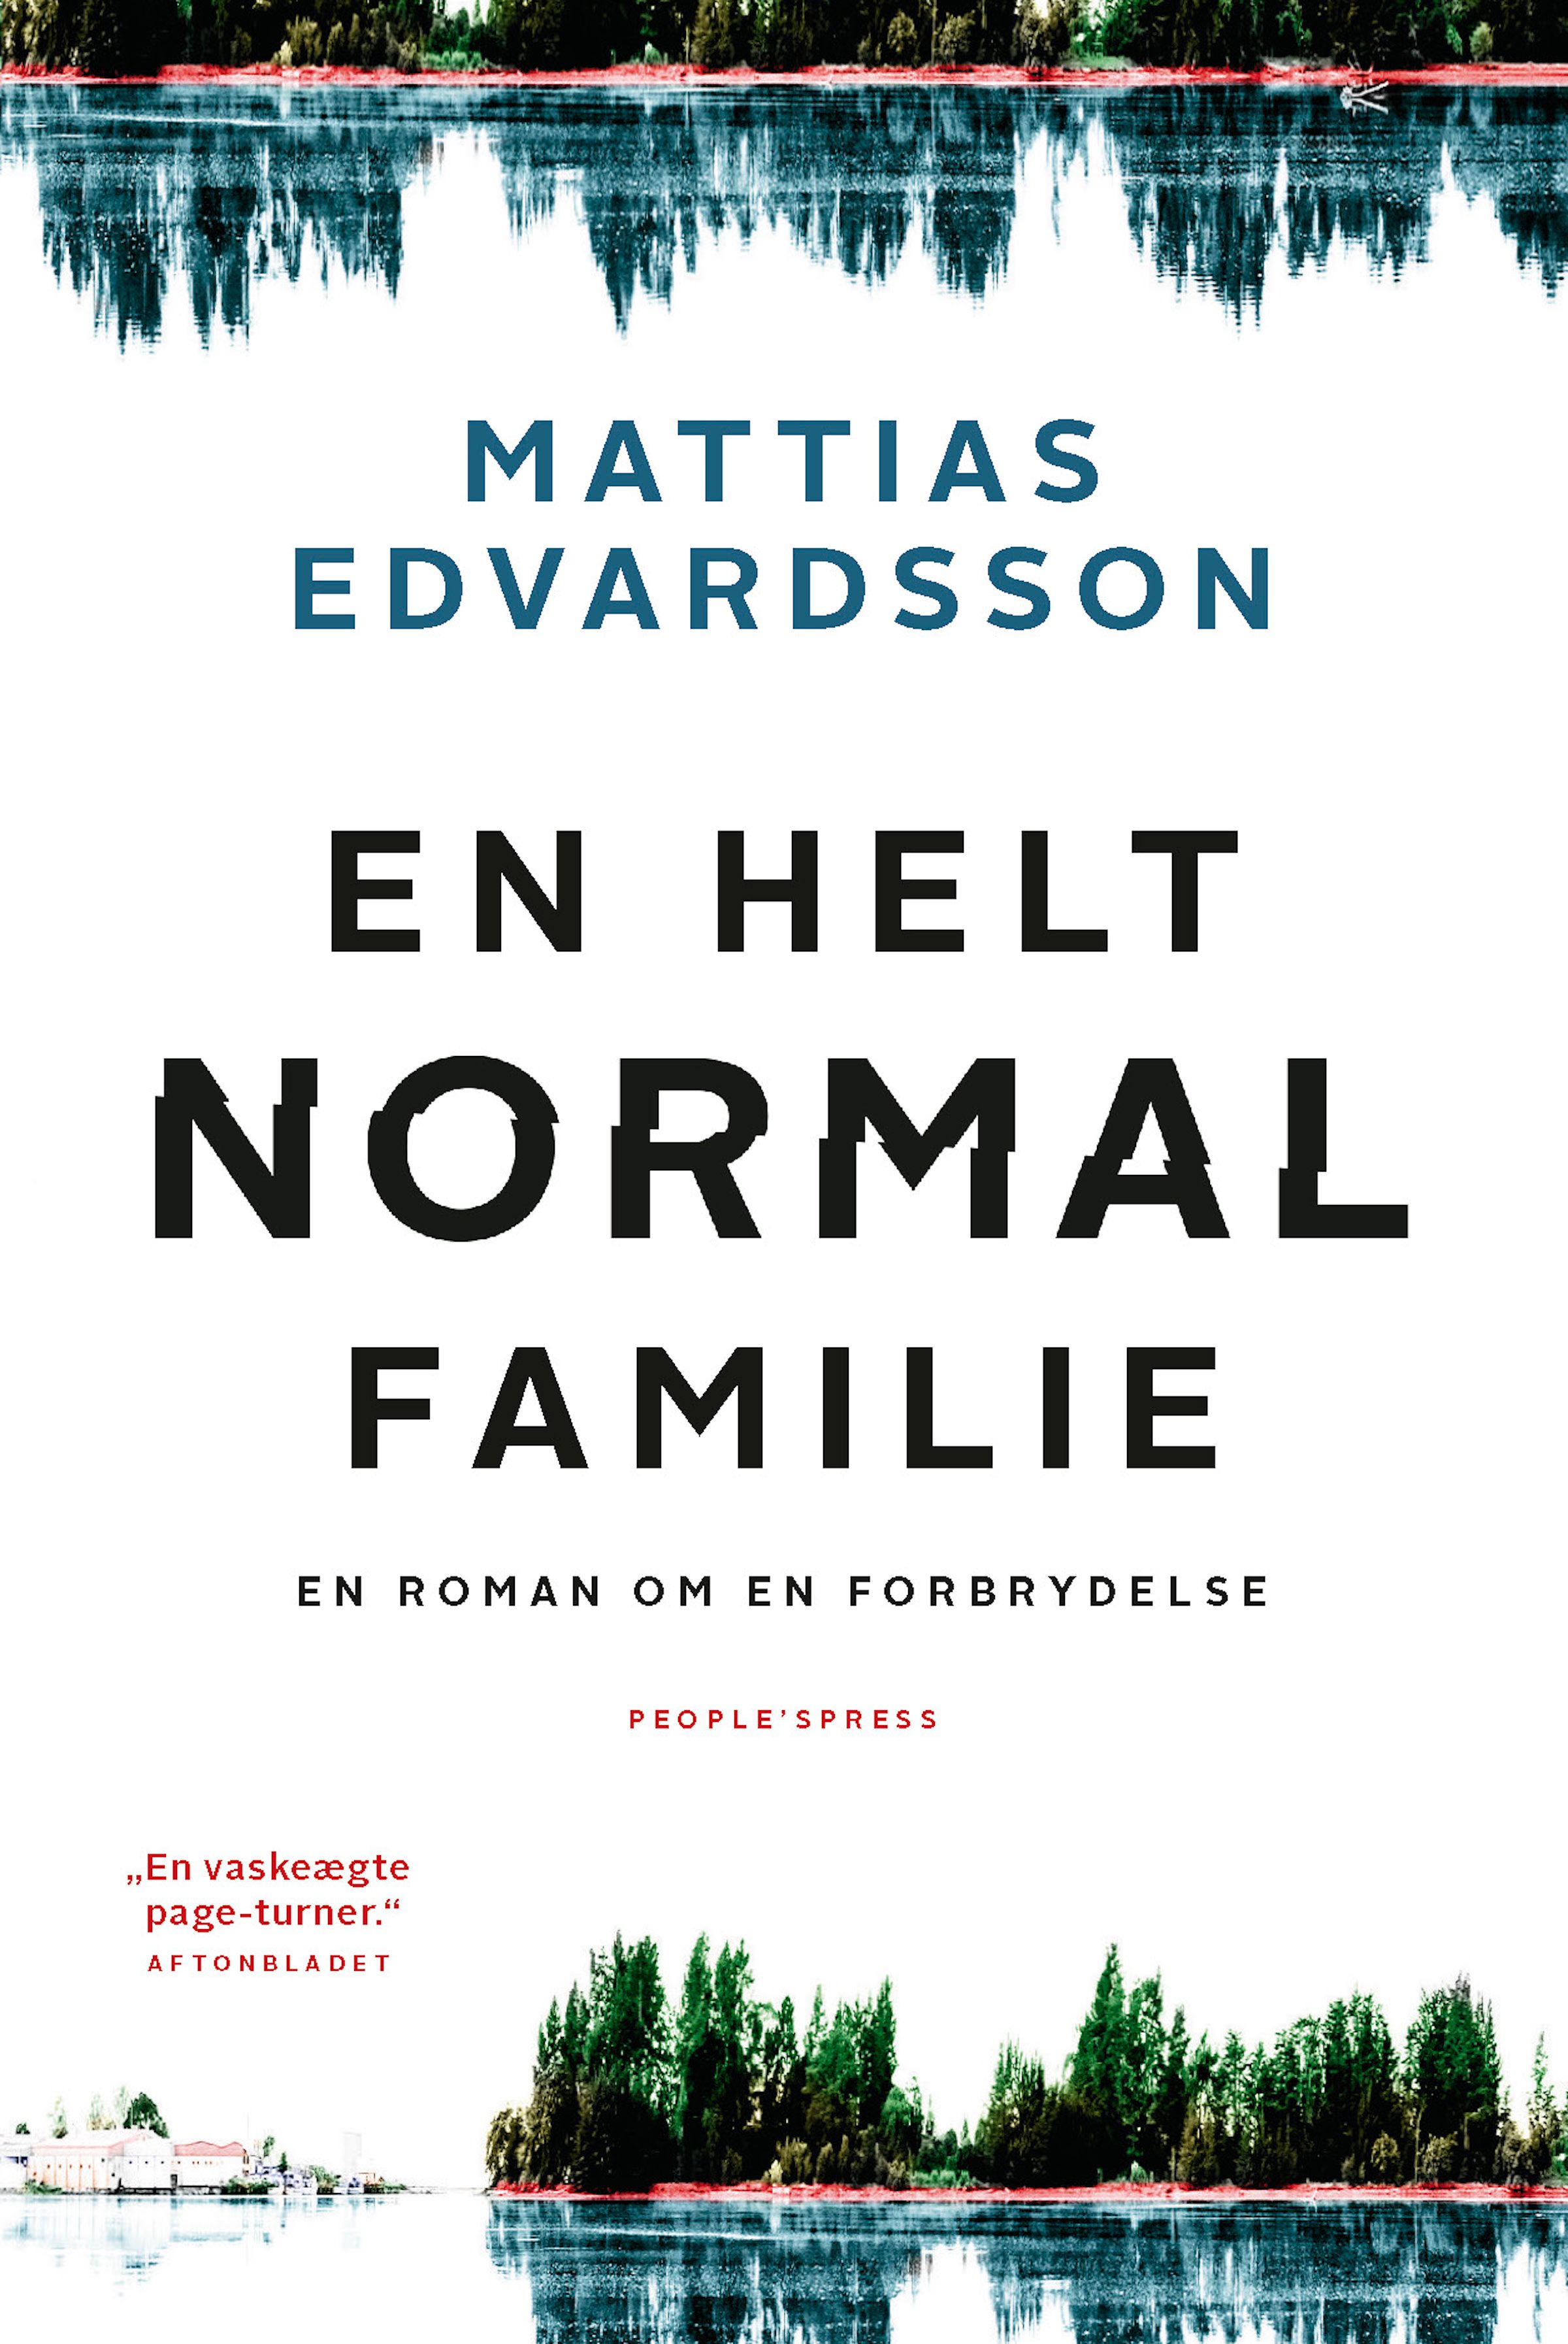 En helt normal familie, eBook by Mattias Edvardsson